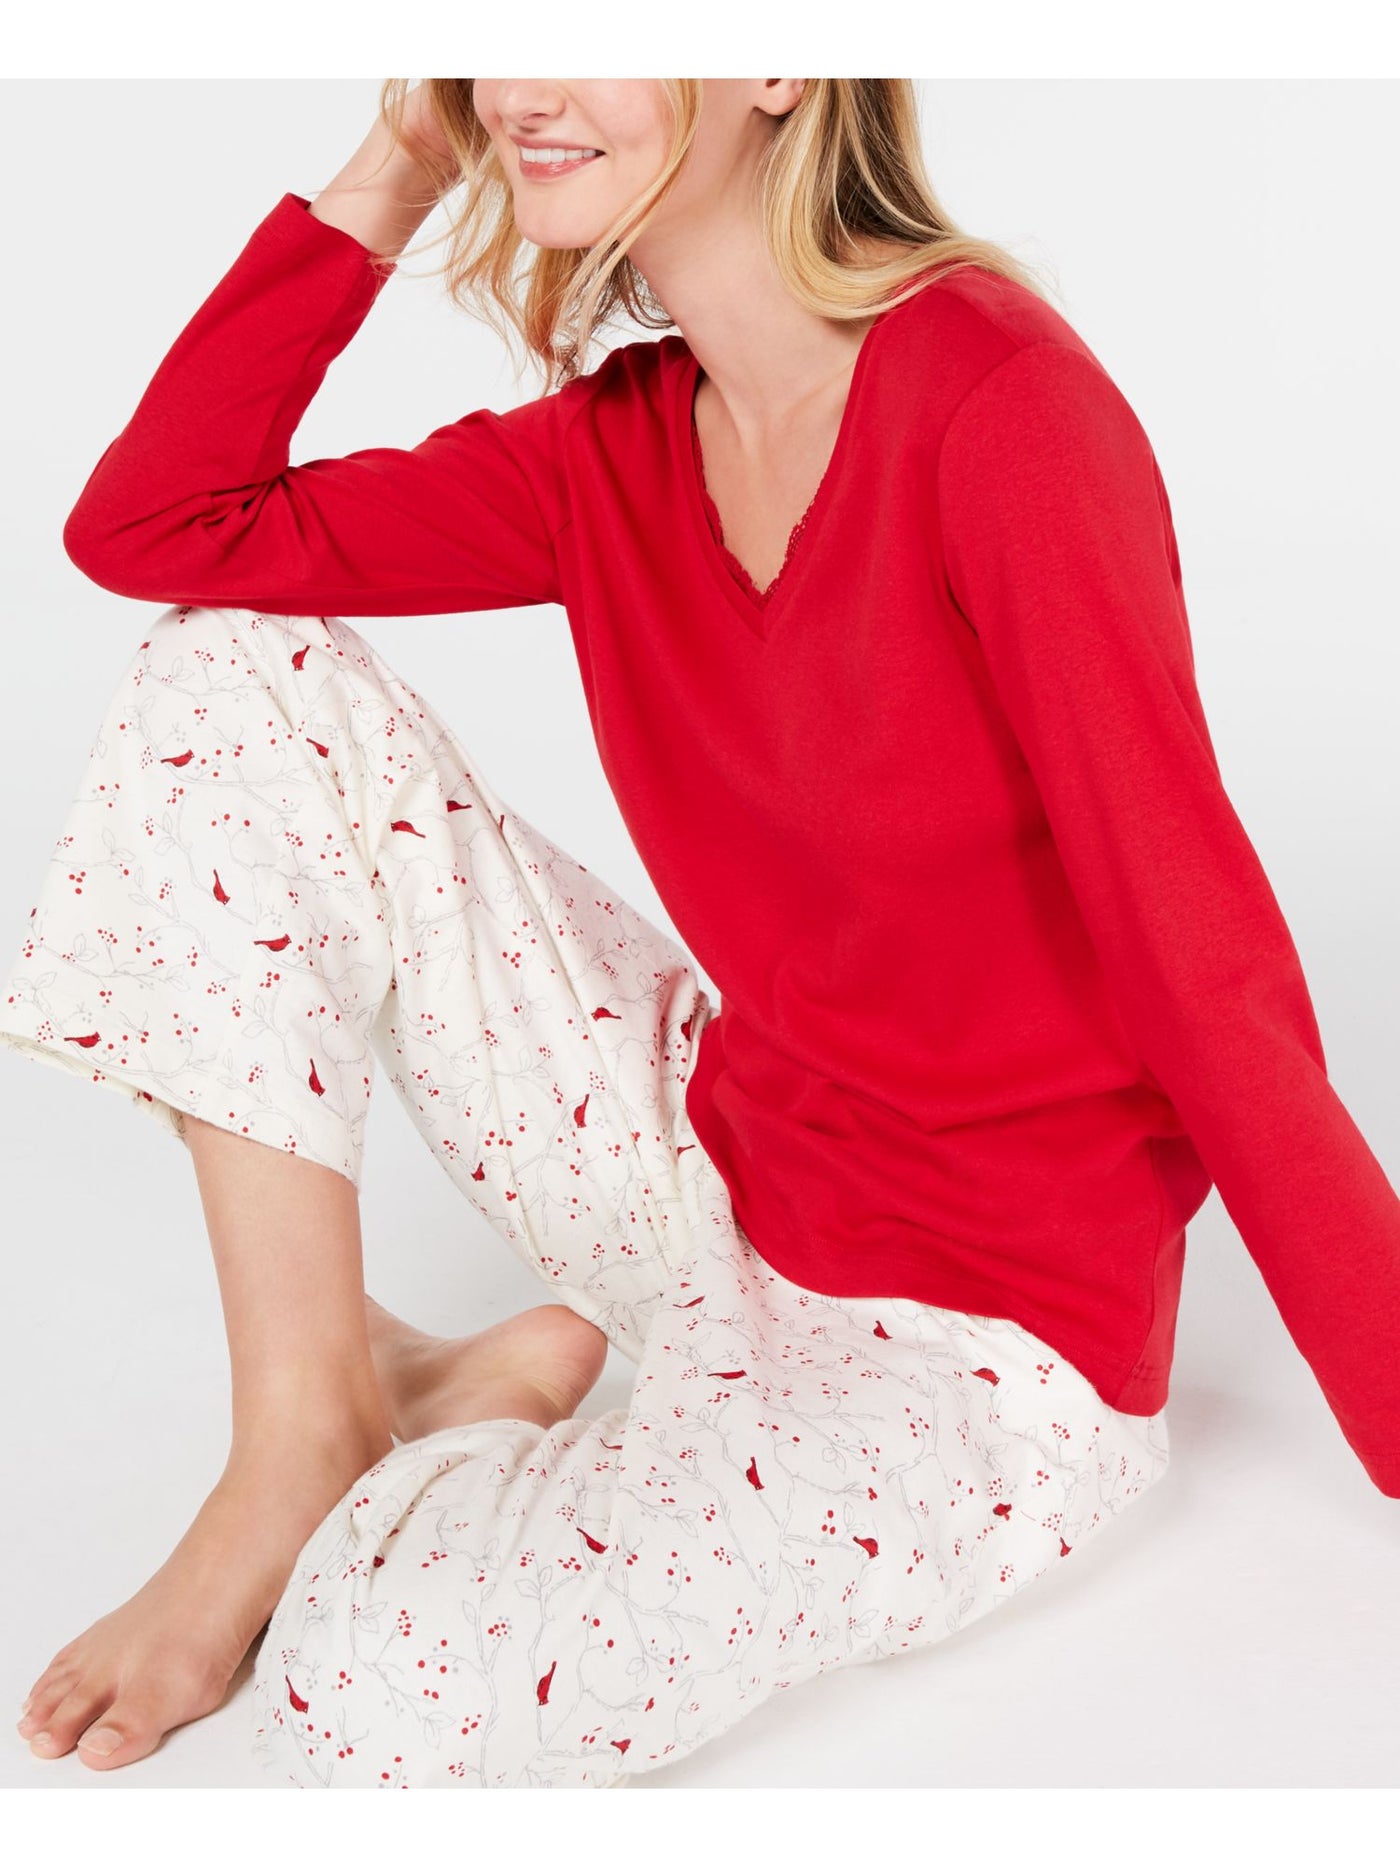 CHARTER CLUB Womens Red Lace Trim Long Sleeve T-Shirt Top Straight leg Pants Pajamas XS